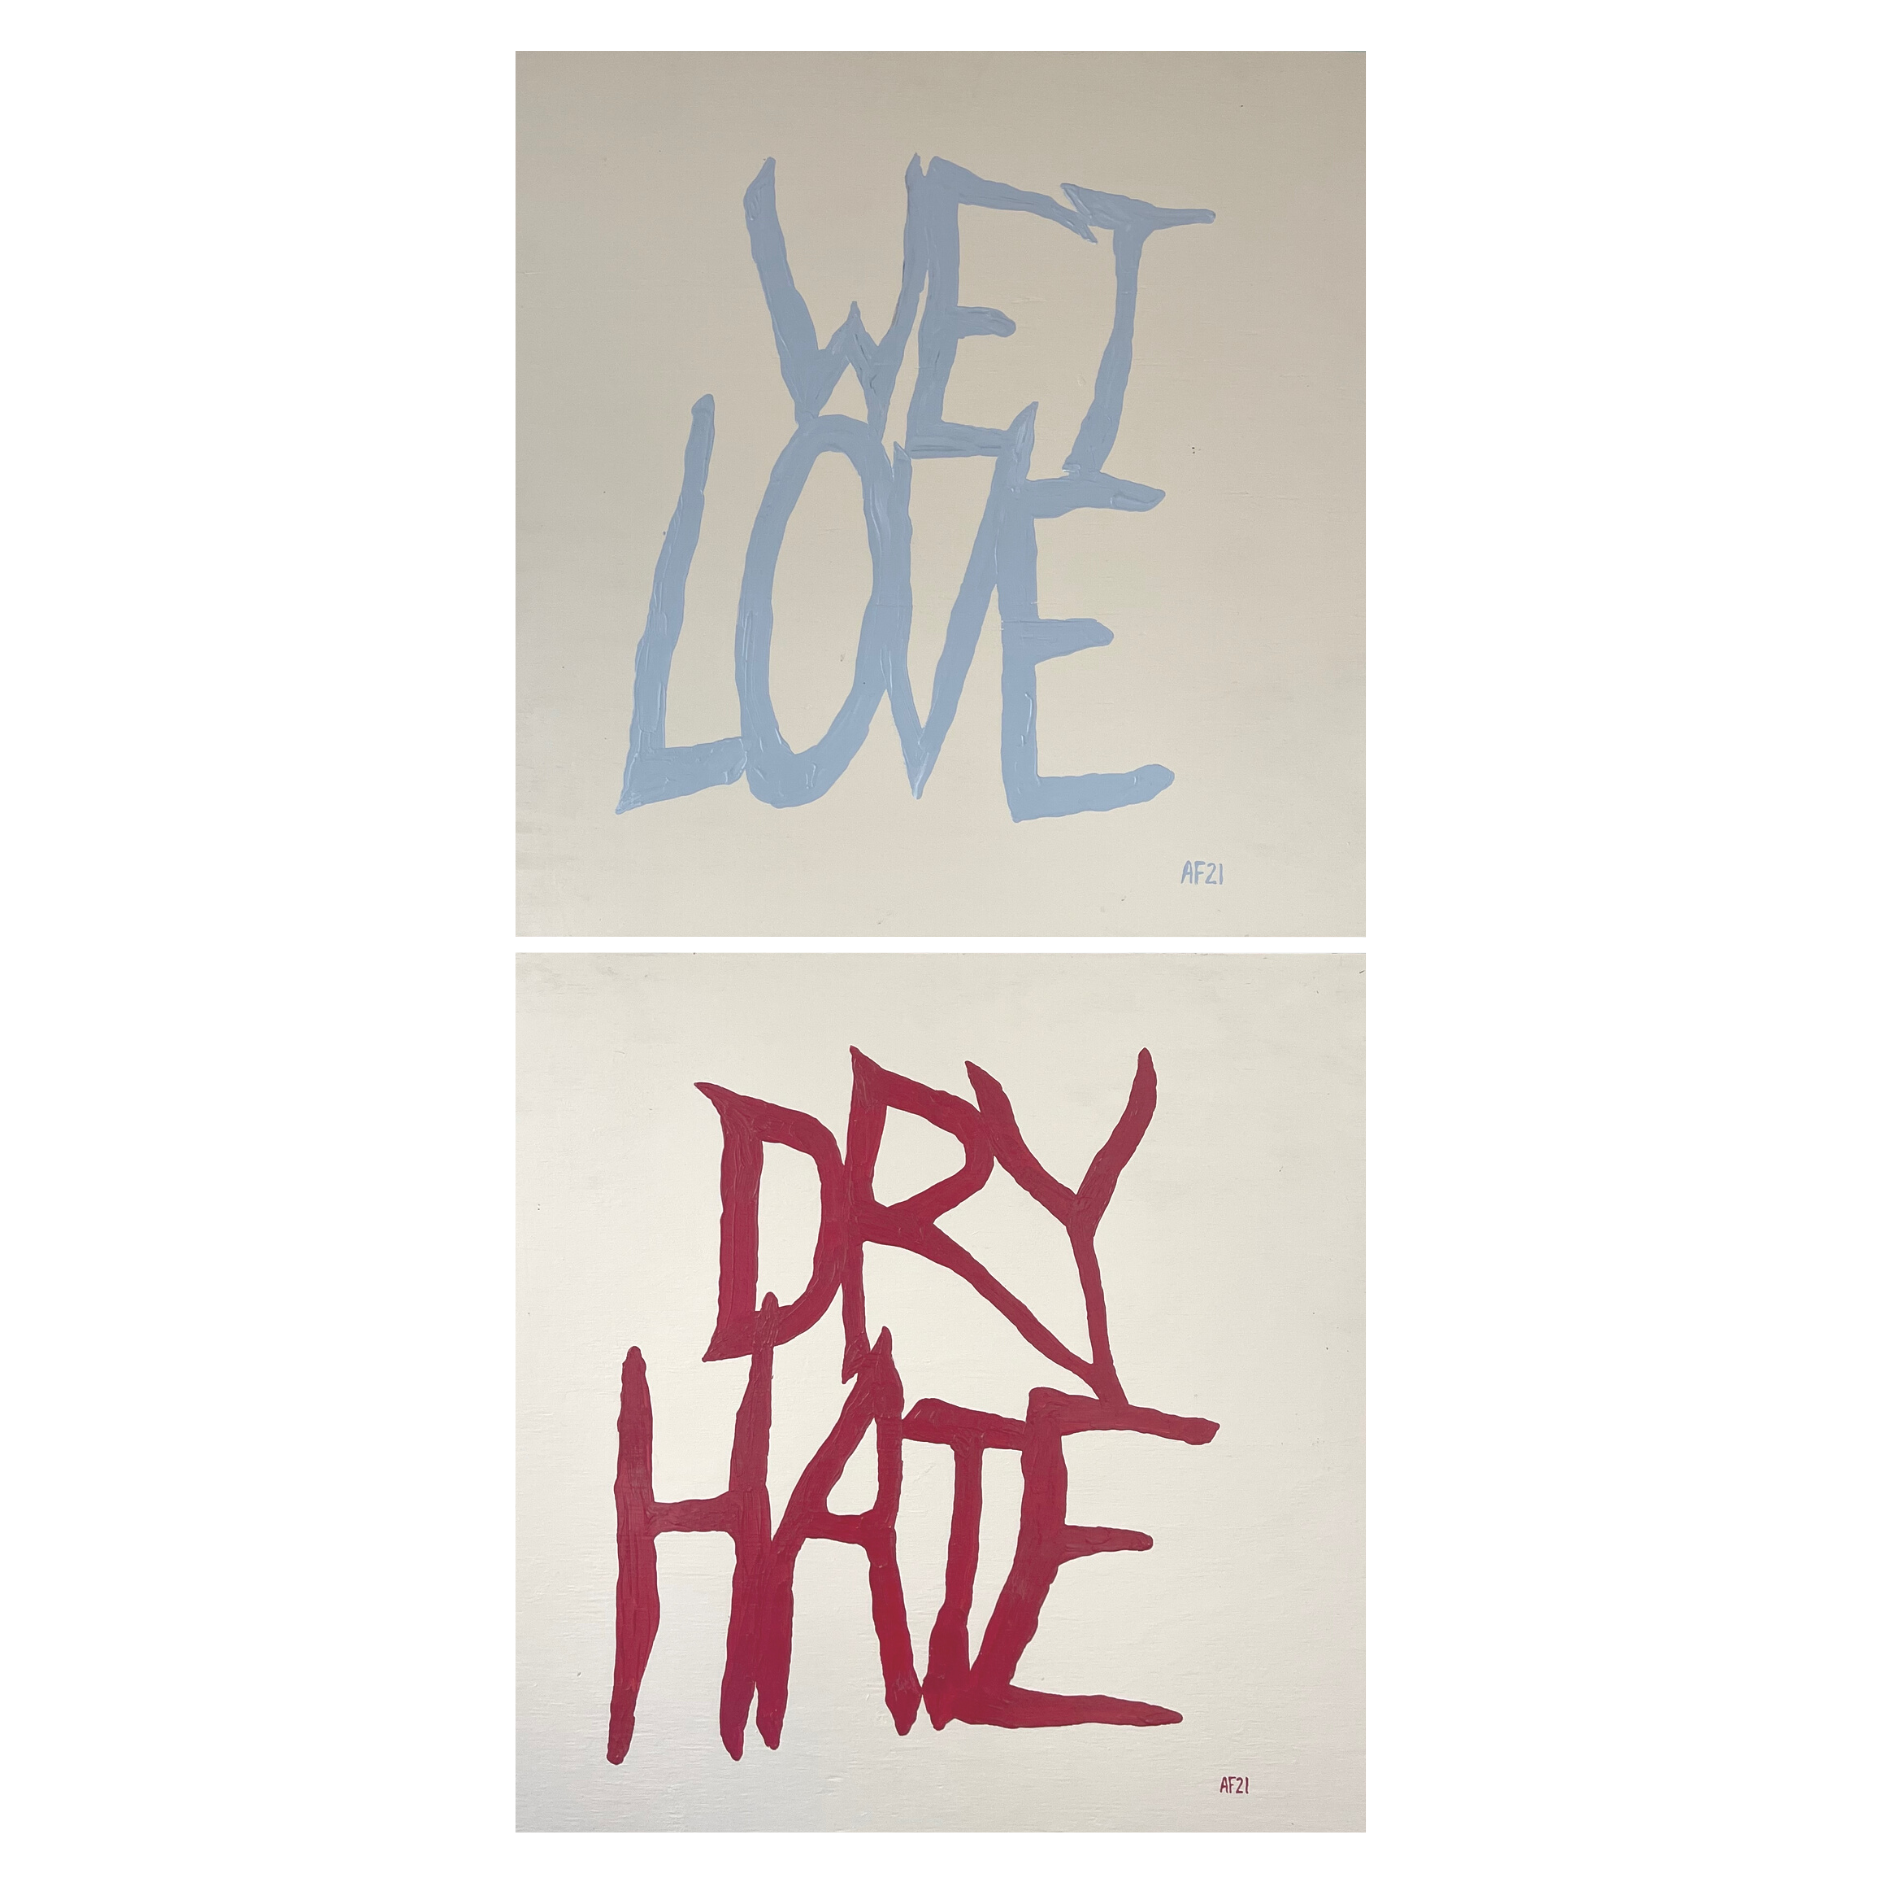 Wet Love/Dry Hate